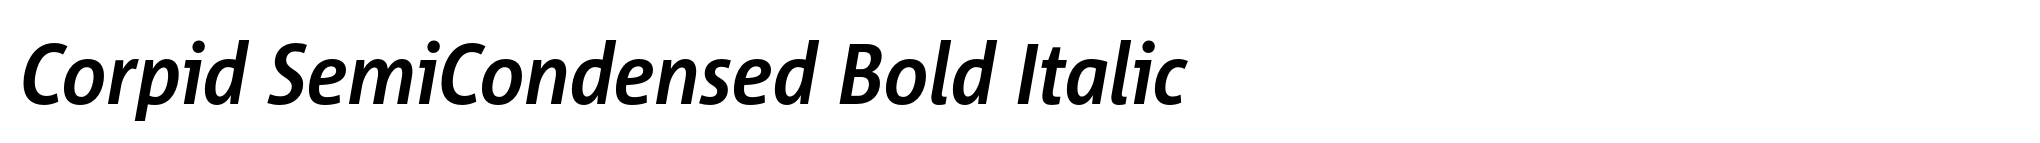 Corpid SemiCondensed Bold Italic image